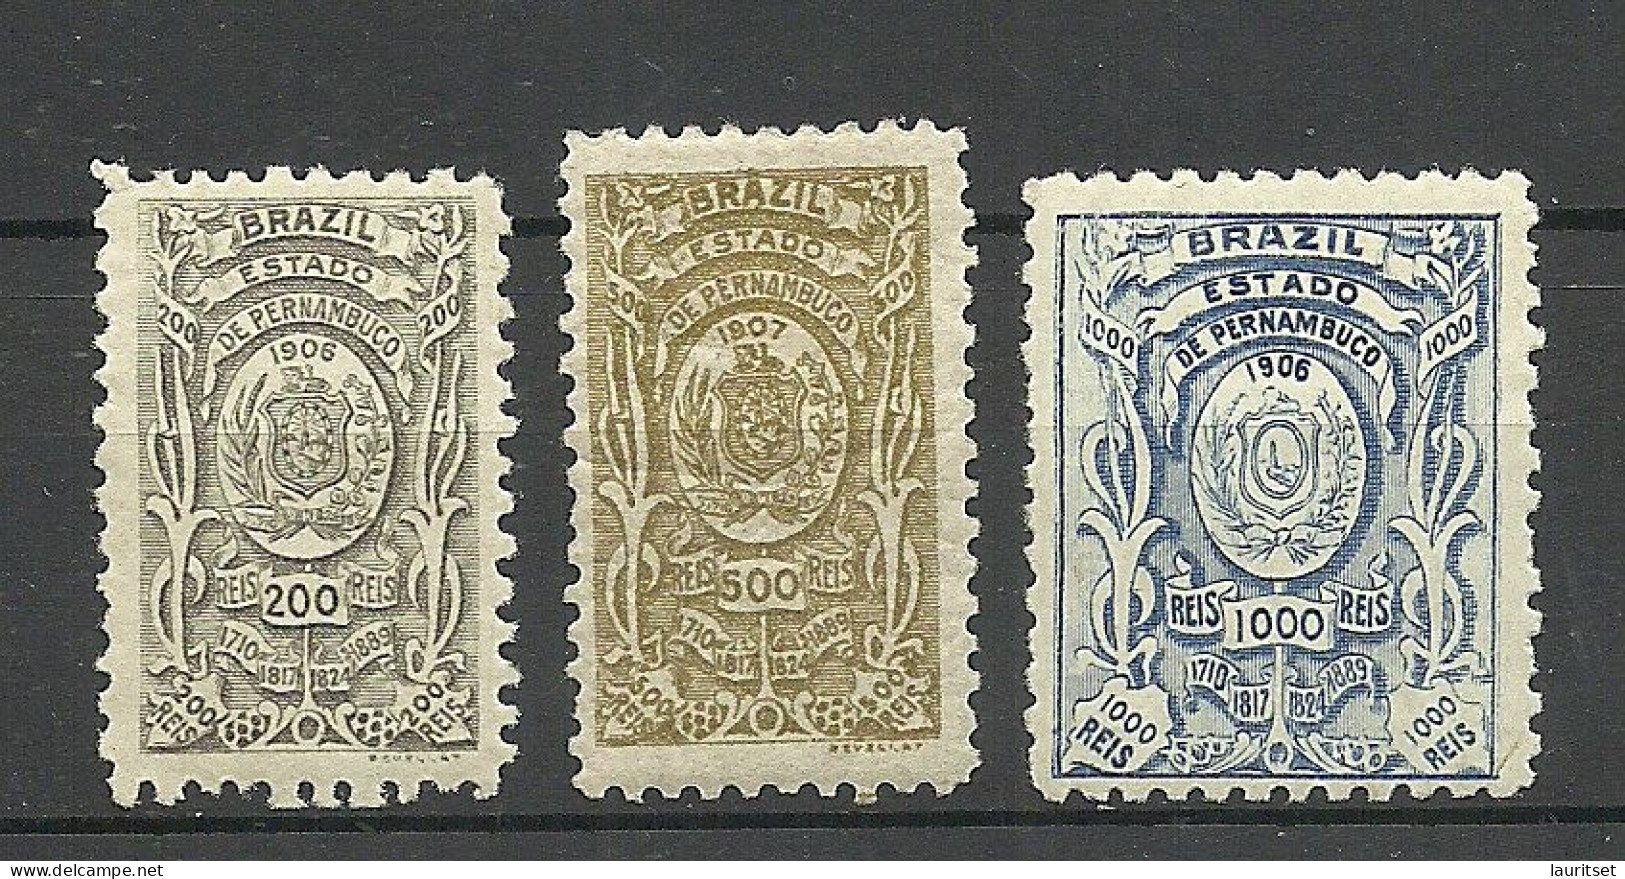 BRAZIL Brazilia Estado De Pernambuco 1898 Local Revenue Taxe Fiscal Tax, 3 Stamps, MNH/MH - Ungebraucht